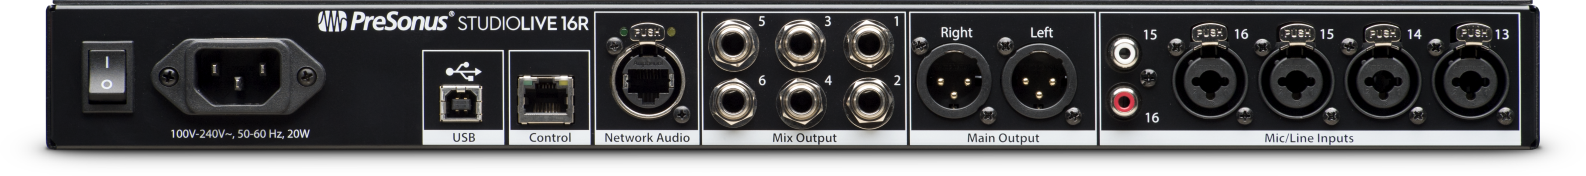 Presonus StudioLive 16R Series 3 Rack Mixer - Aron Soitin